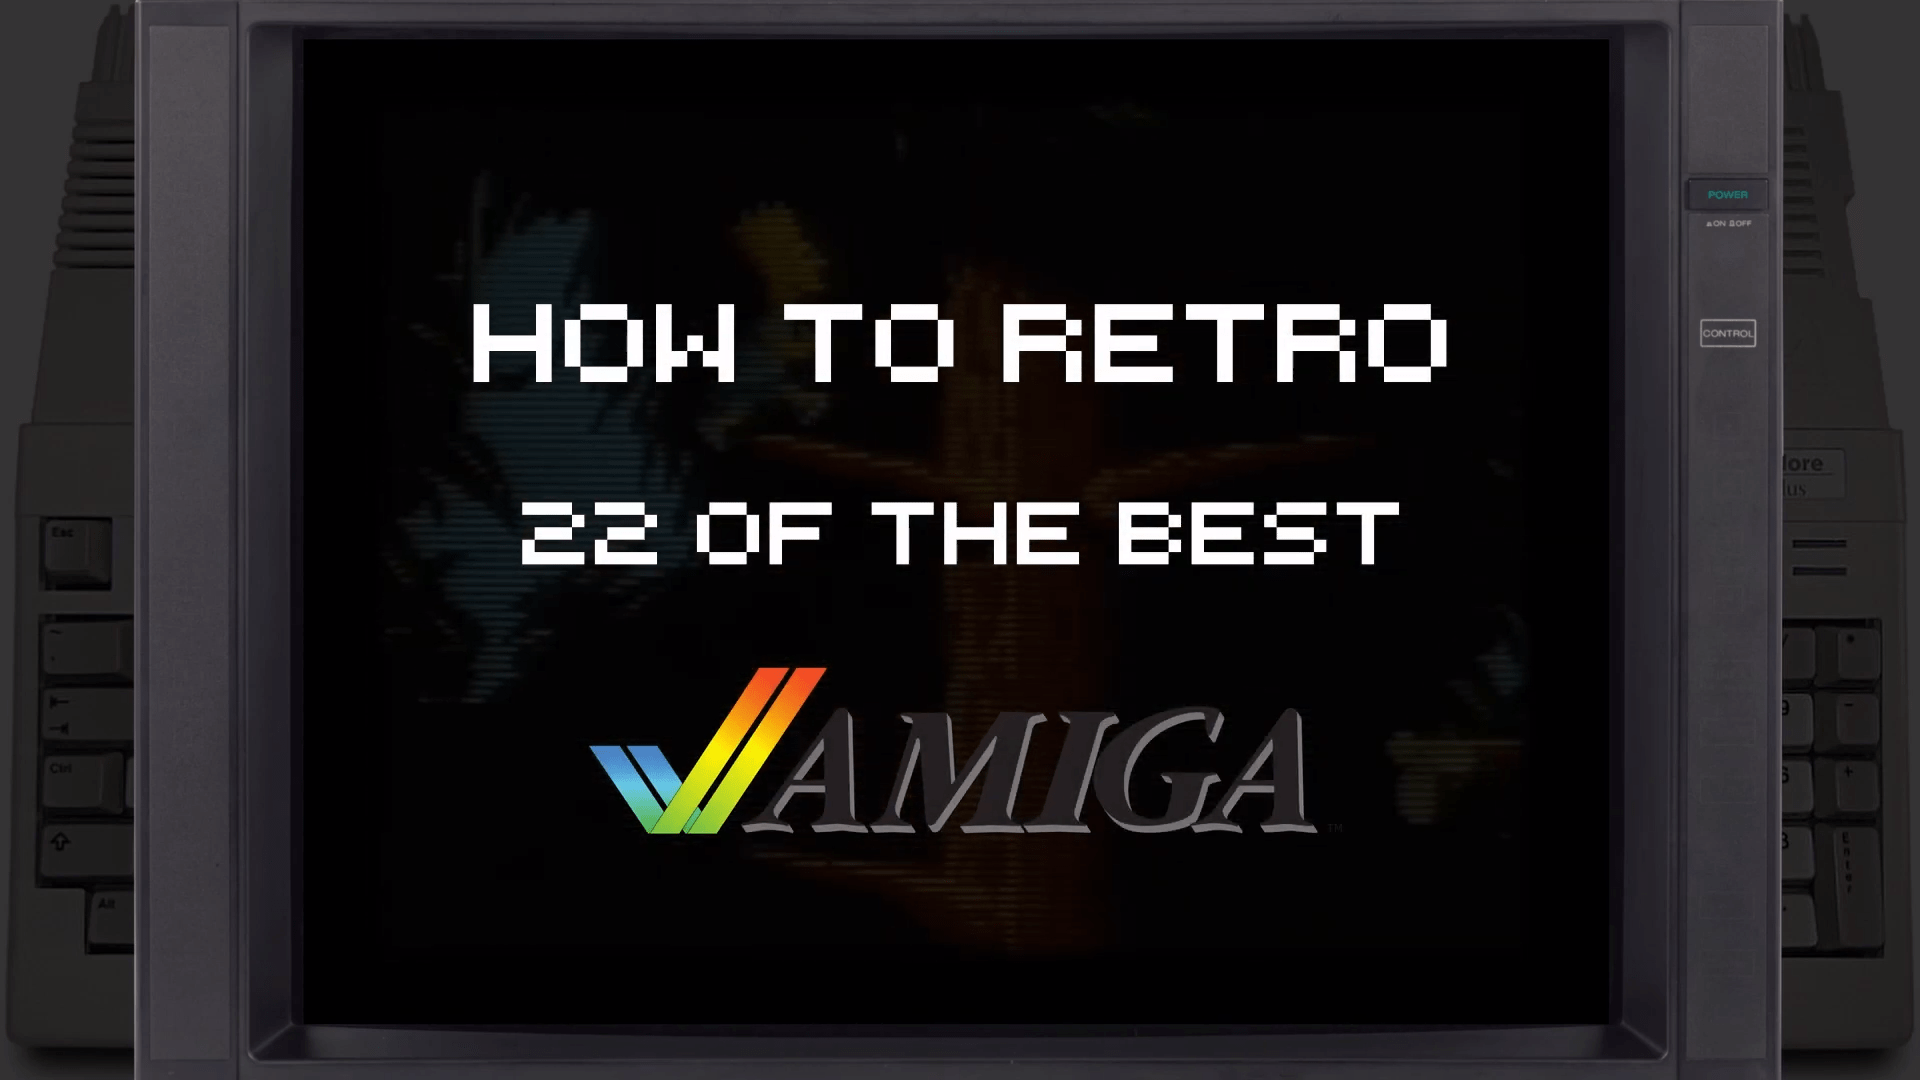 22 of the Best Commodore Amiga Games